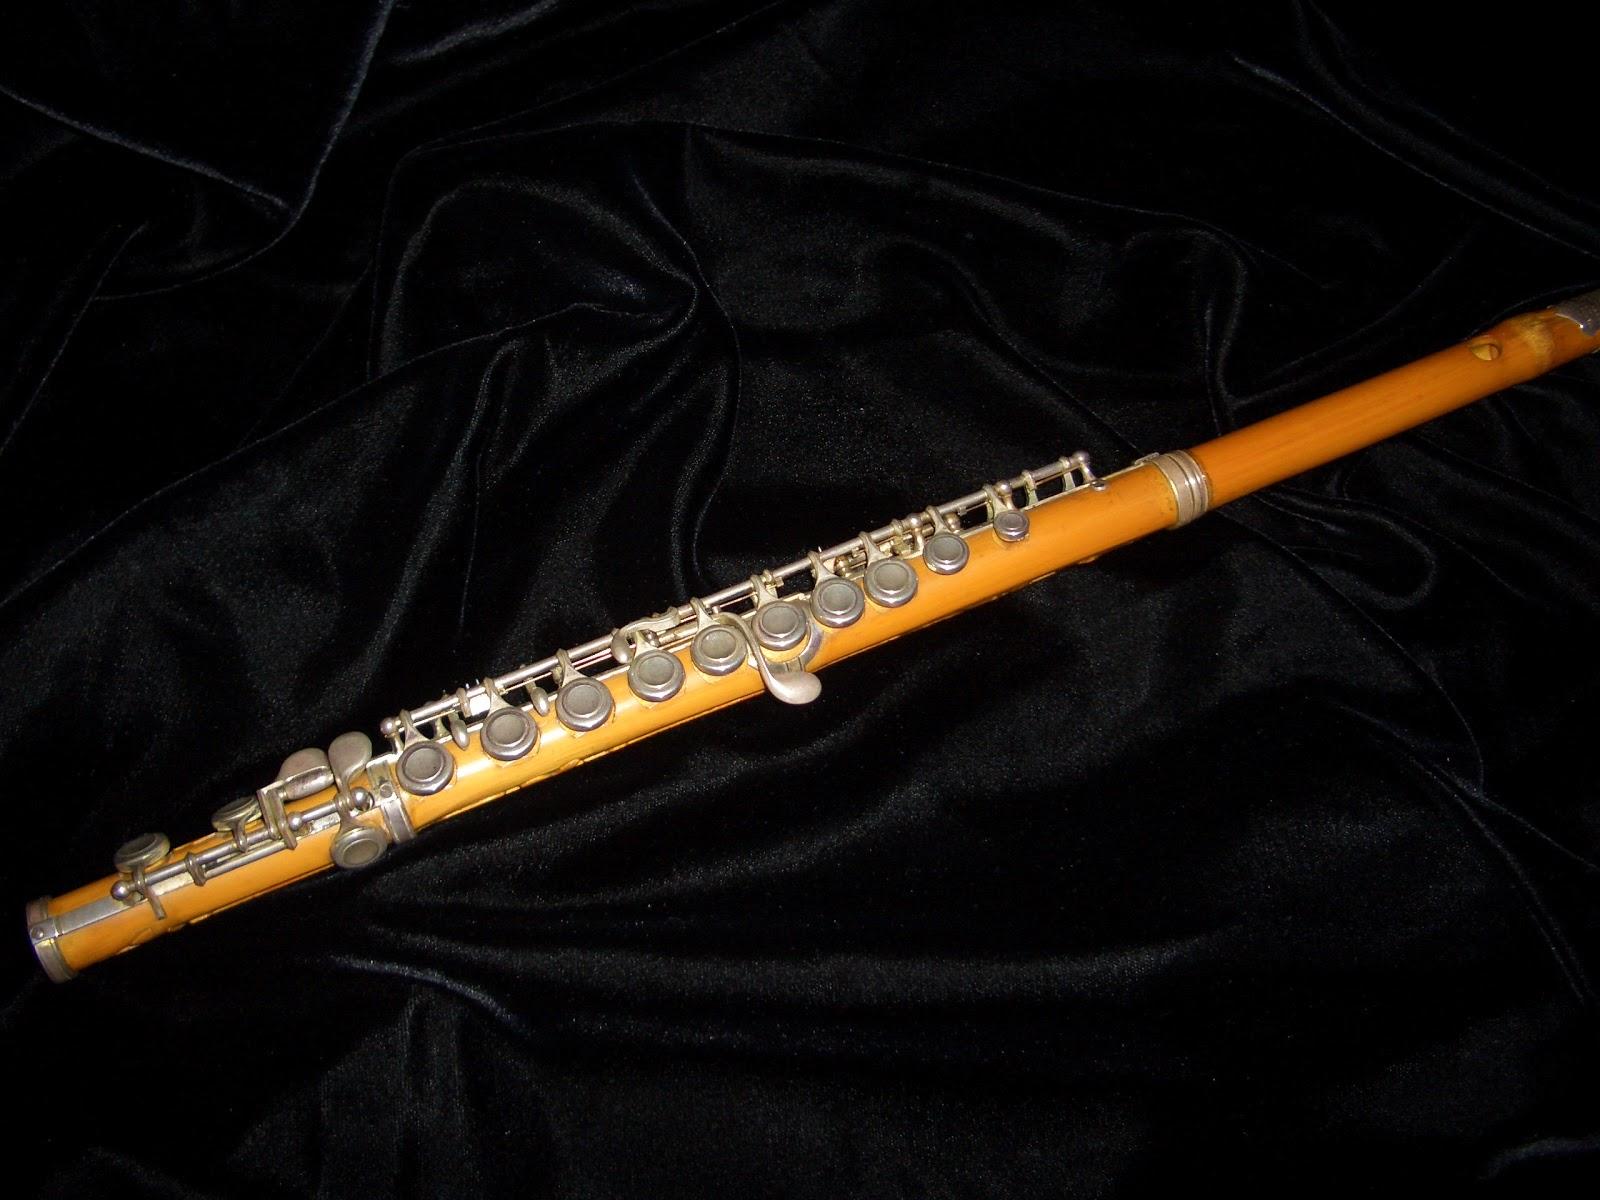 Flute Builder, The Bamboo Flute